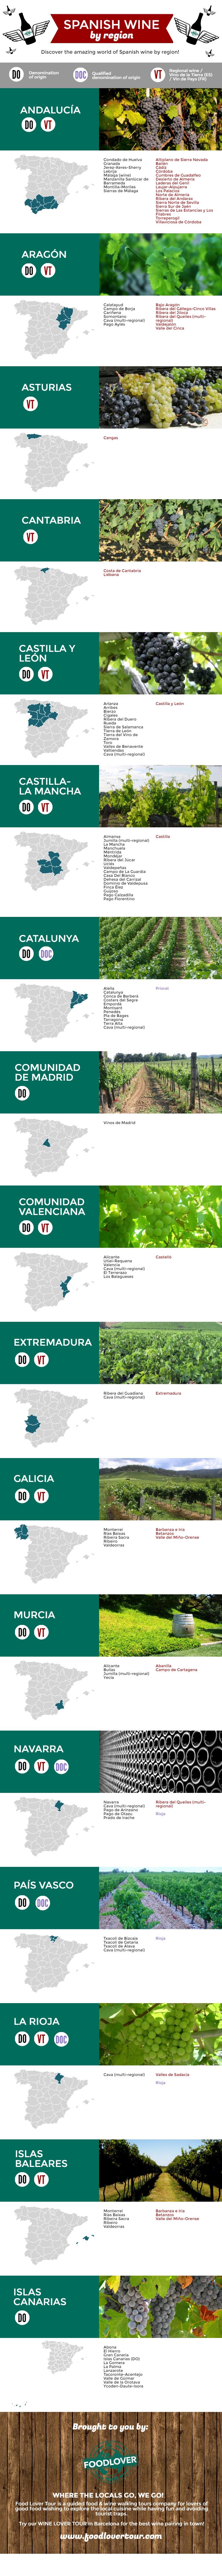 Spanish Wine by Region